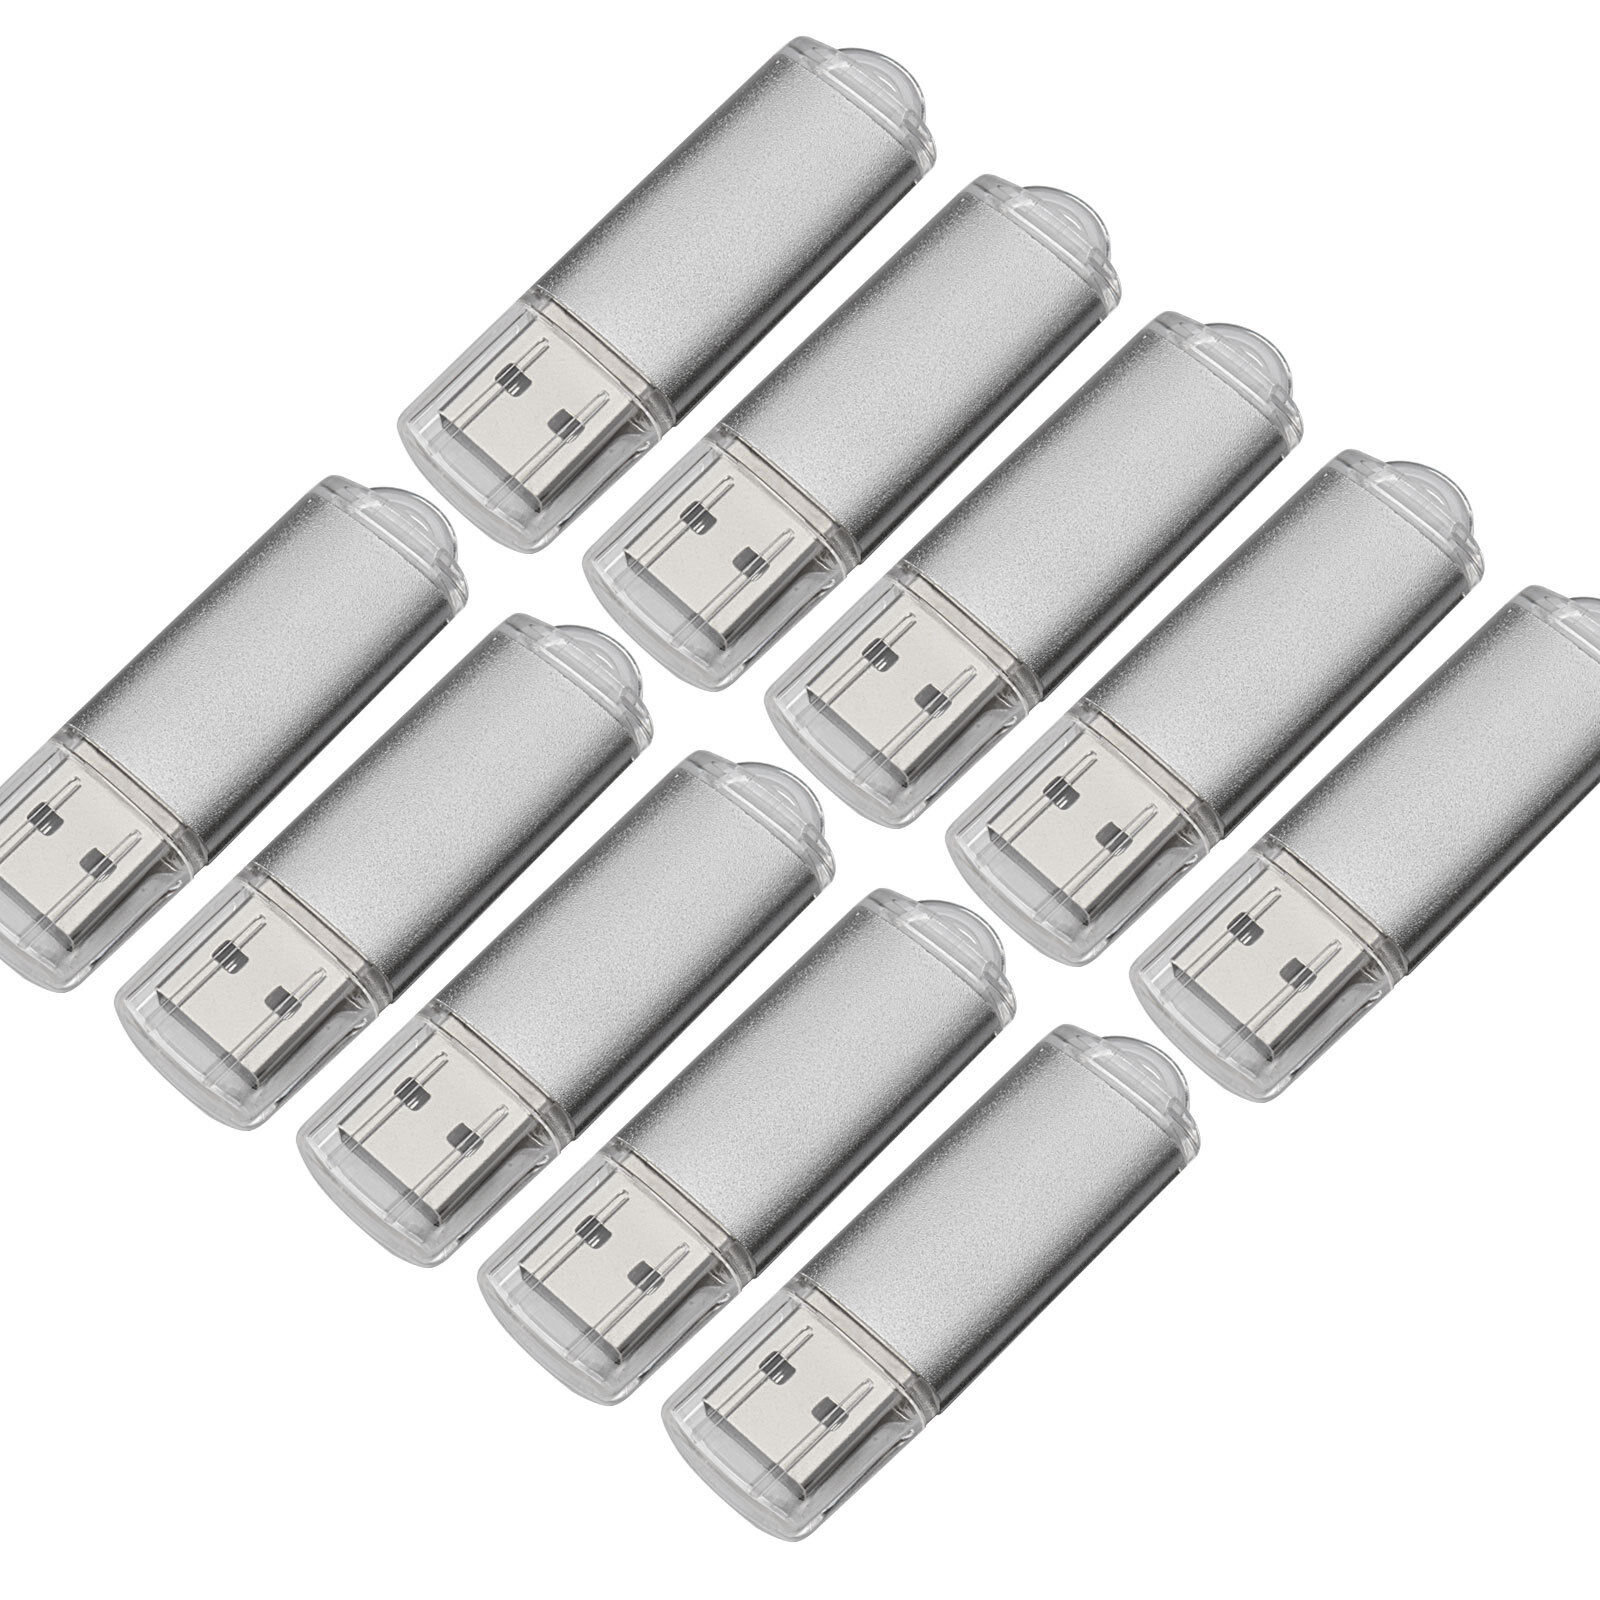 Wholesale 10/20/50/100PCS 1GB USB Flash Drives Memory Stick Thumb Storage U Disk